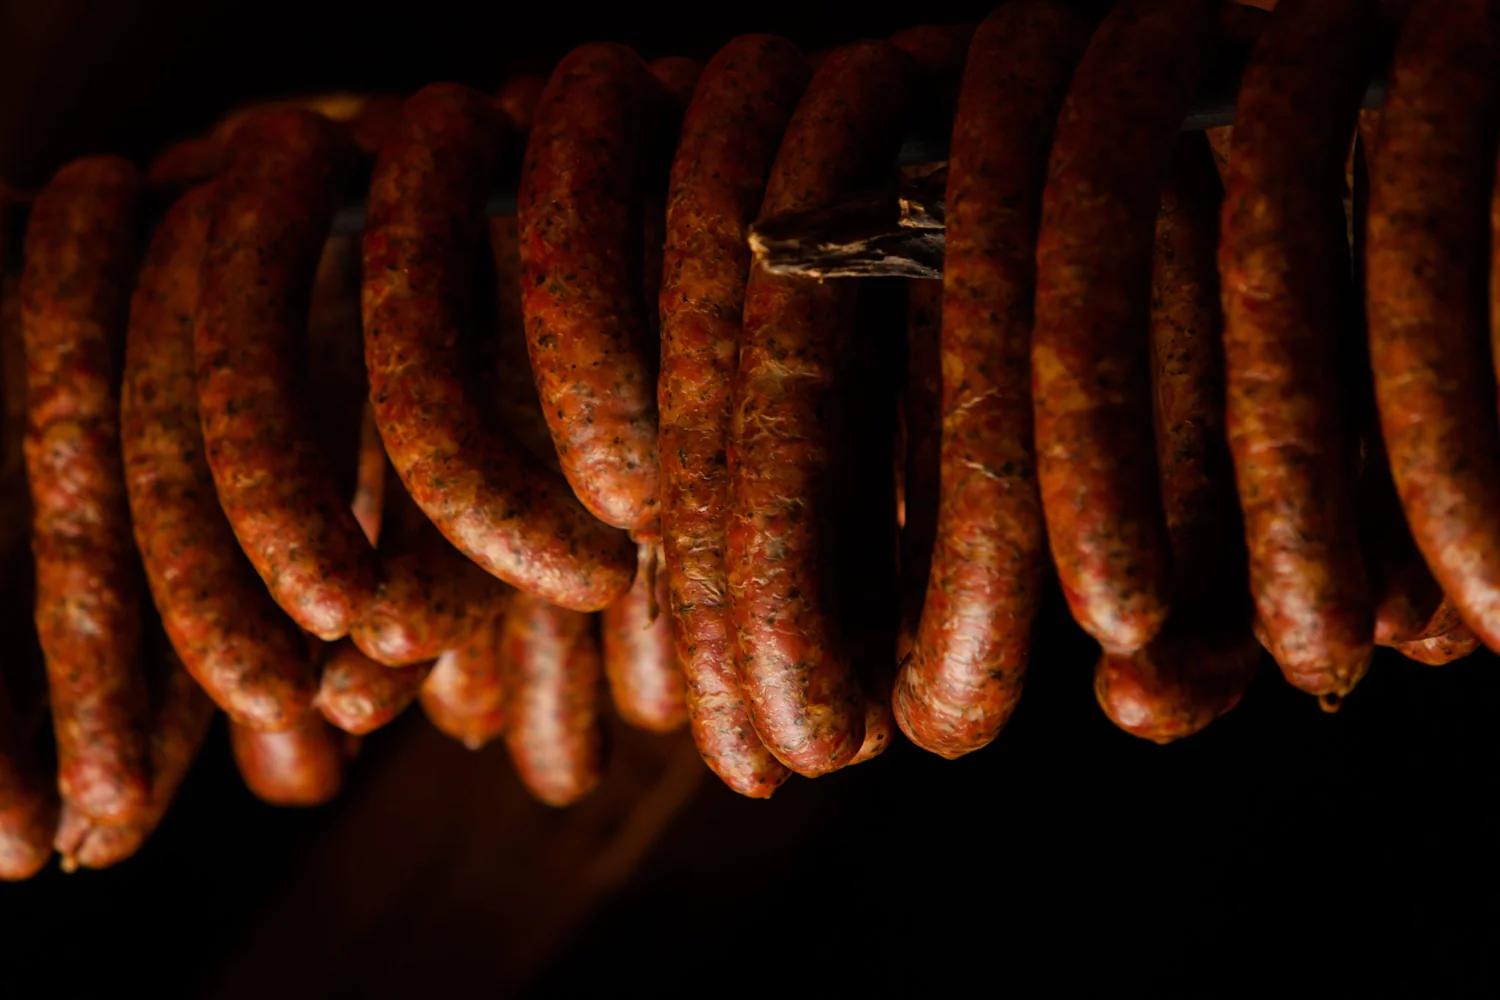 bradley smoked sausage - How do you smoke sausages in a Bradley